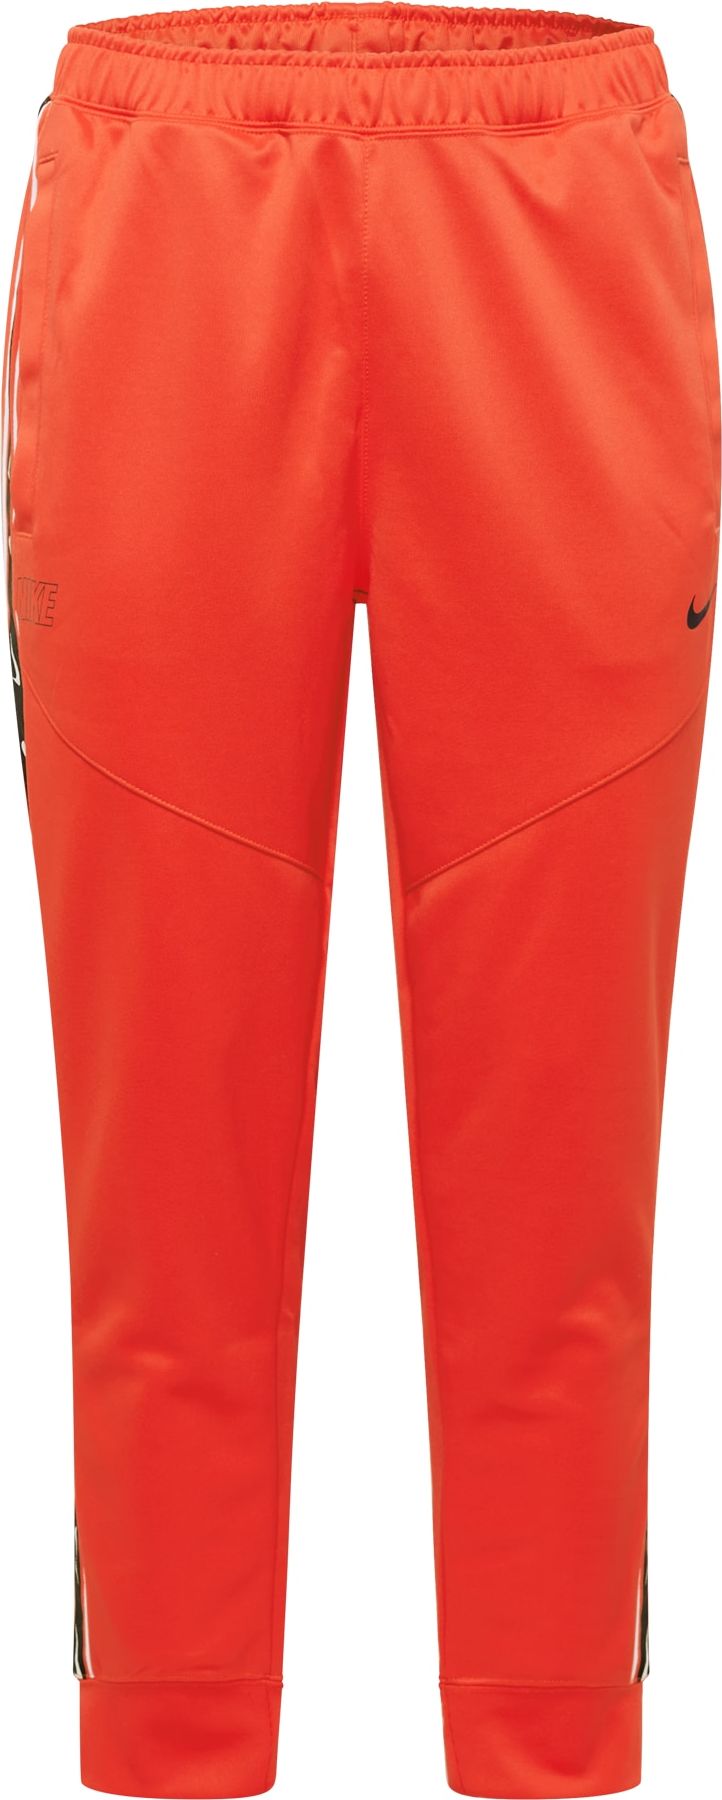 Nike Sportswear Kalhoty ohnivá červená / černá / bílá